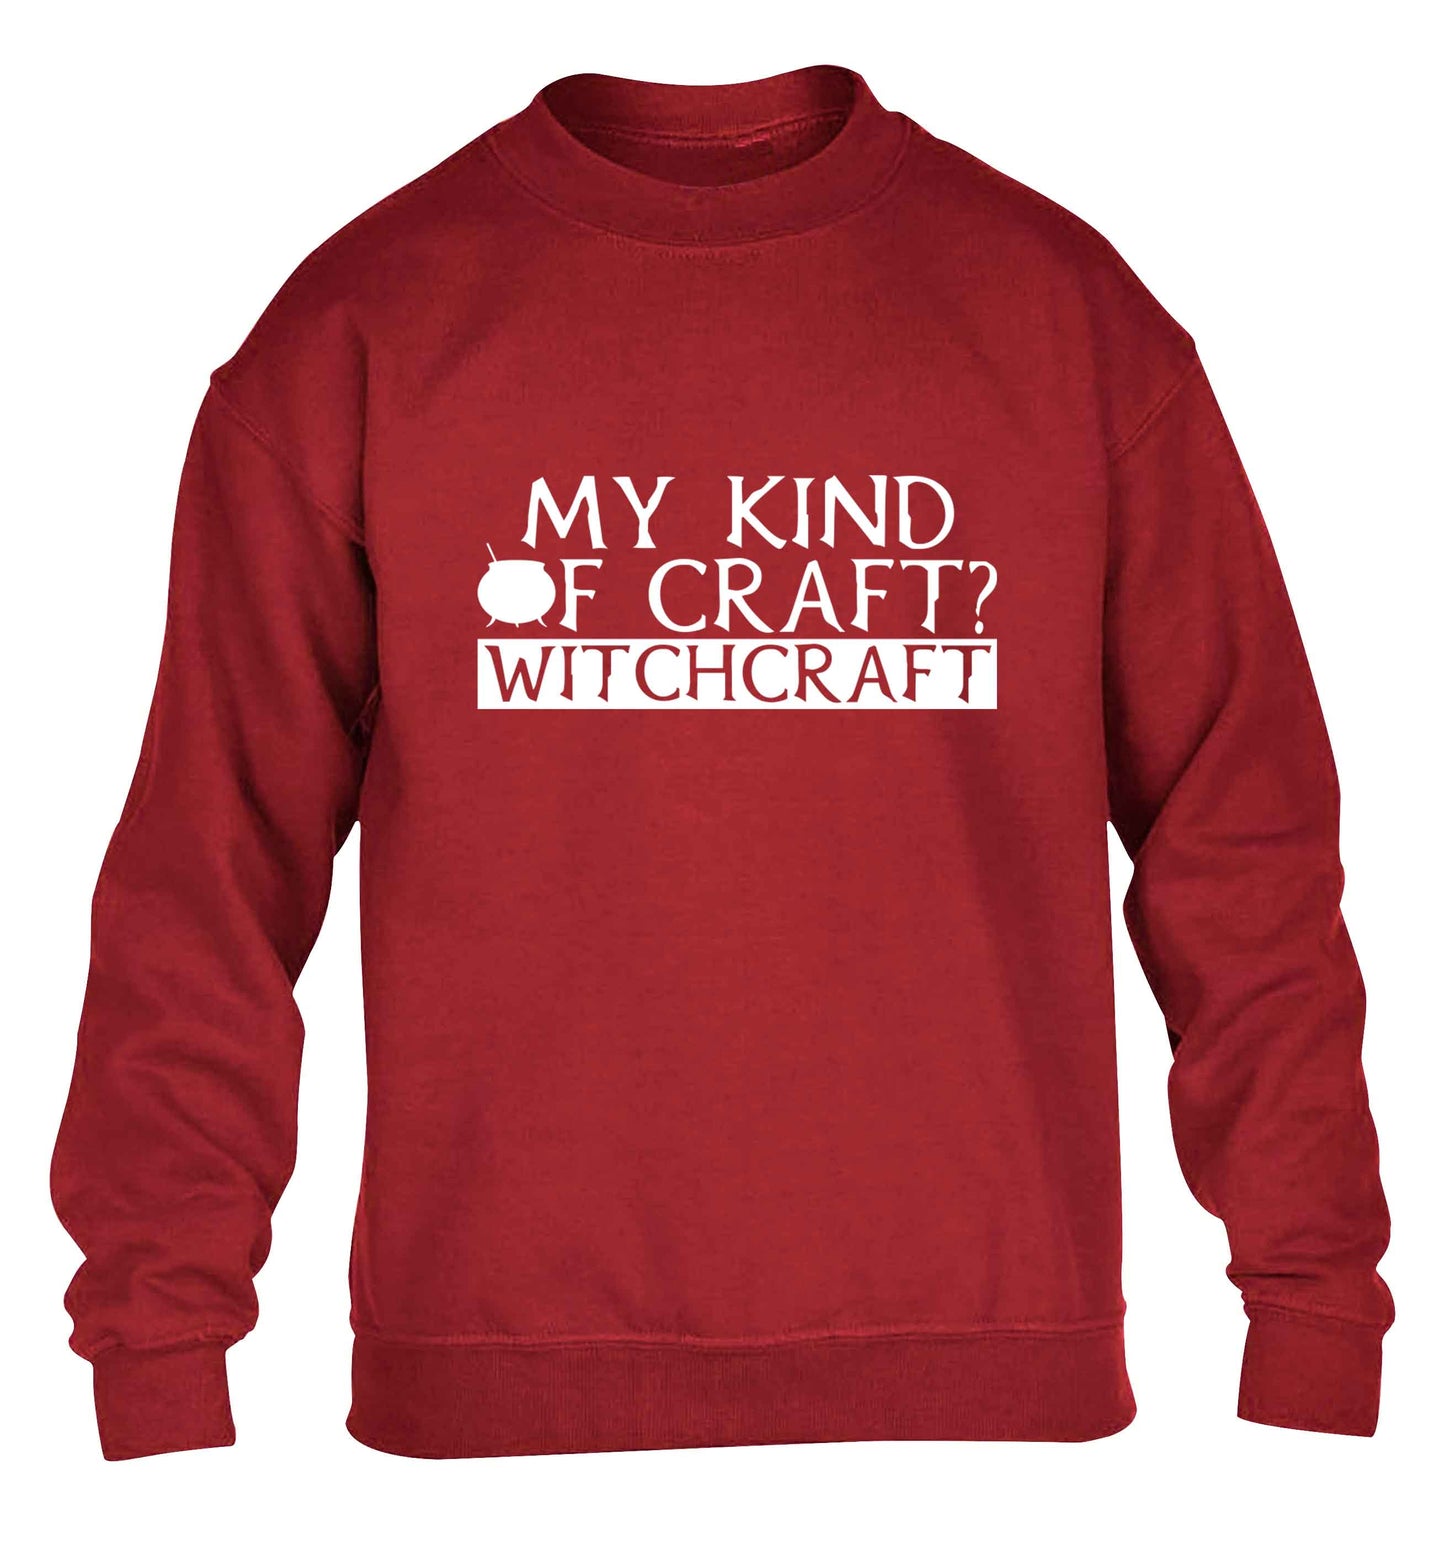 My king of craft? witchcraft  children's grey sweater 12-13 Years